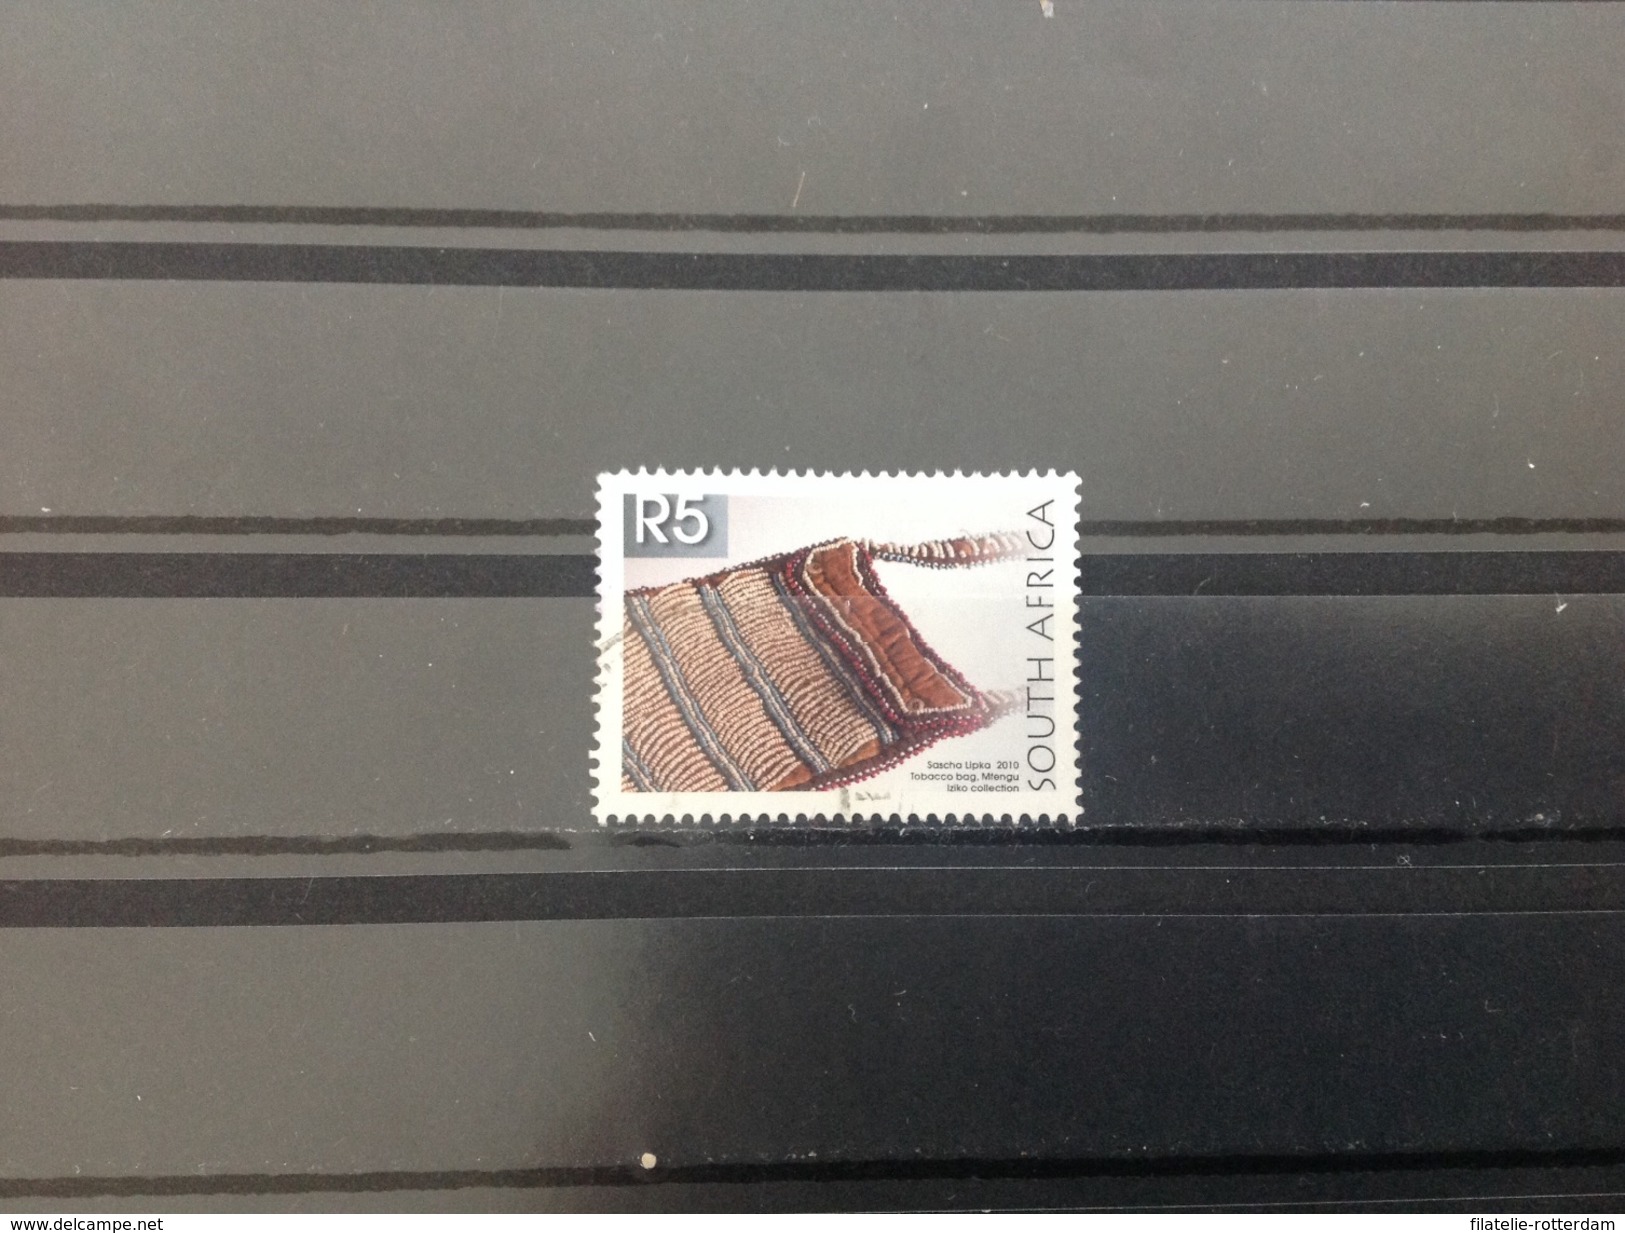 Zuid-Afrika / South Africa - Kralen Kunstwerk (R5) 2010 - Used Stamps